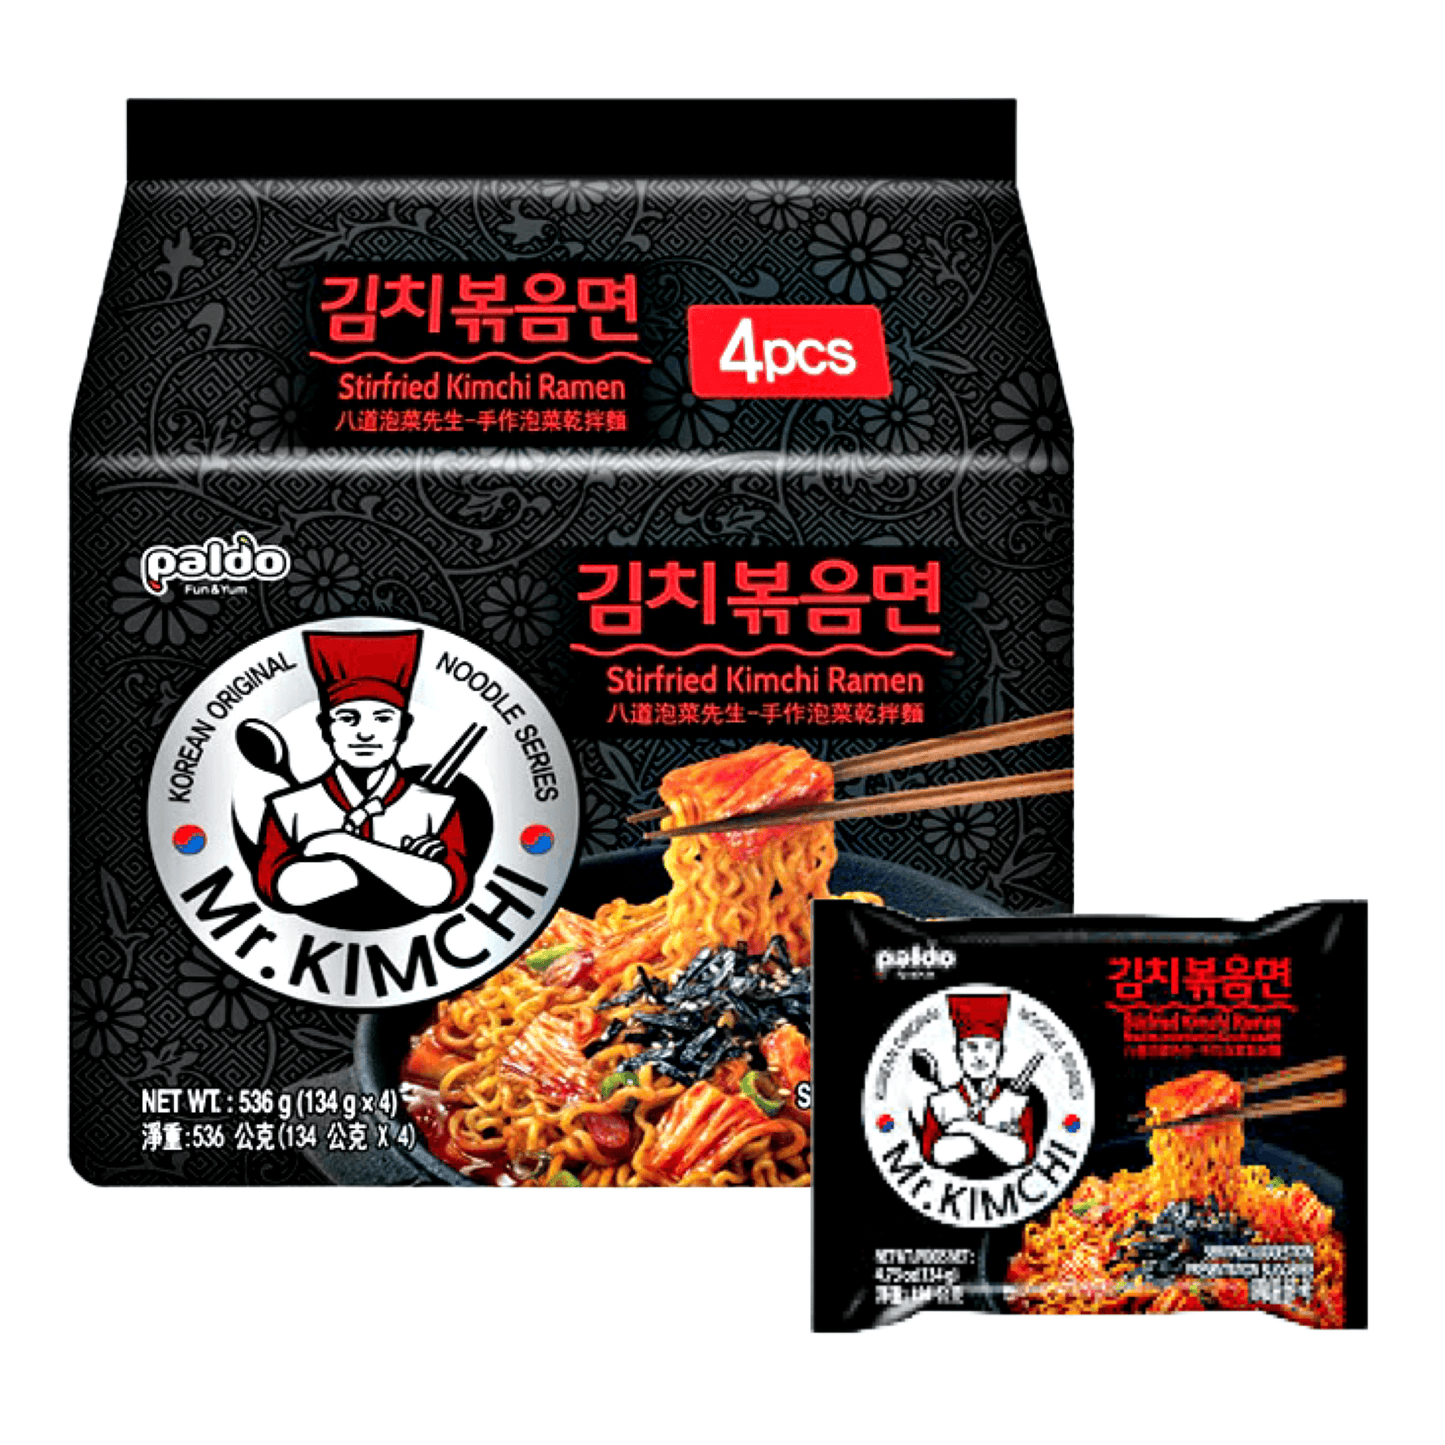 Paldo Stir-fried Kimchi Ramen 4x134g - The Snacks Box - Asian Snacks Store - The Snacks Box - Korean Snack - Japanese Snack